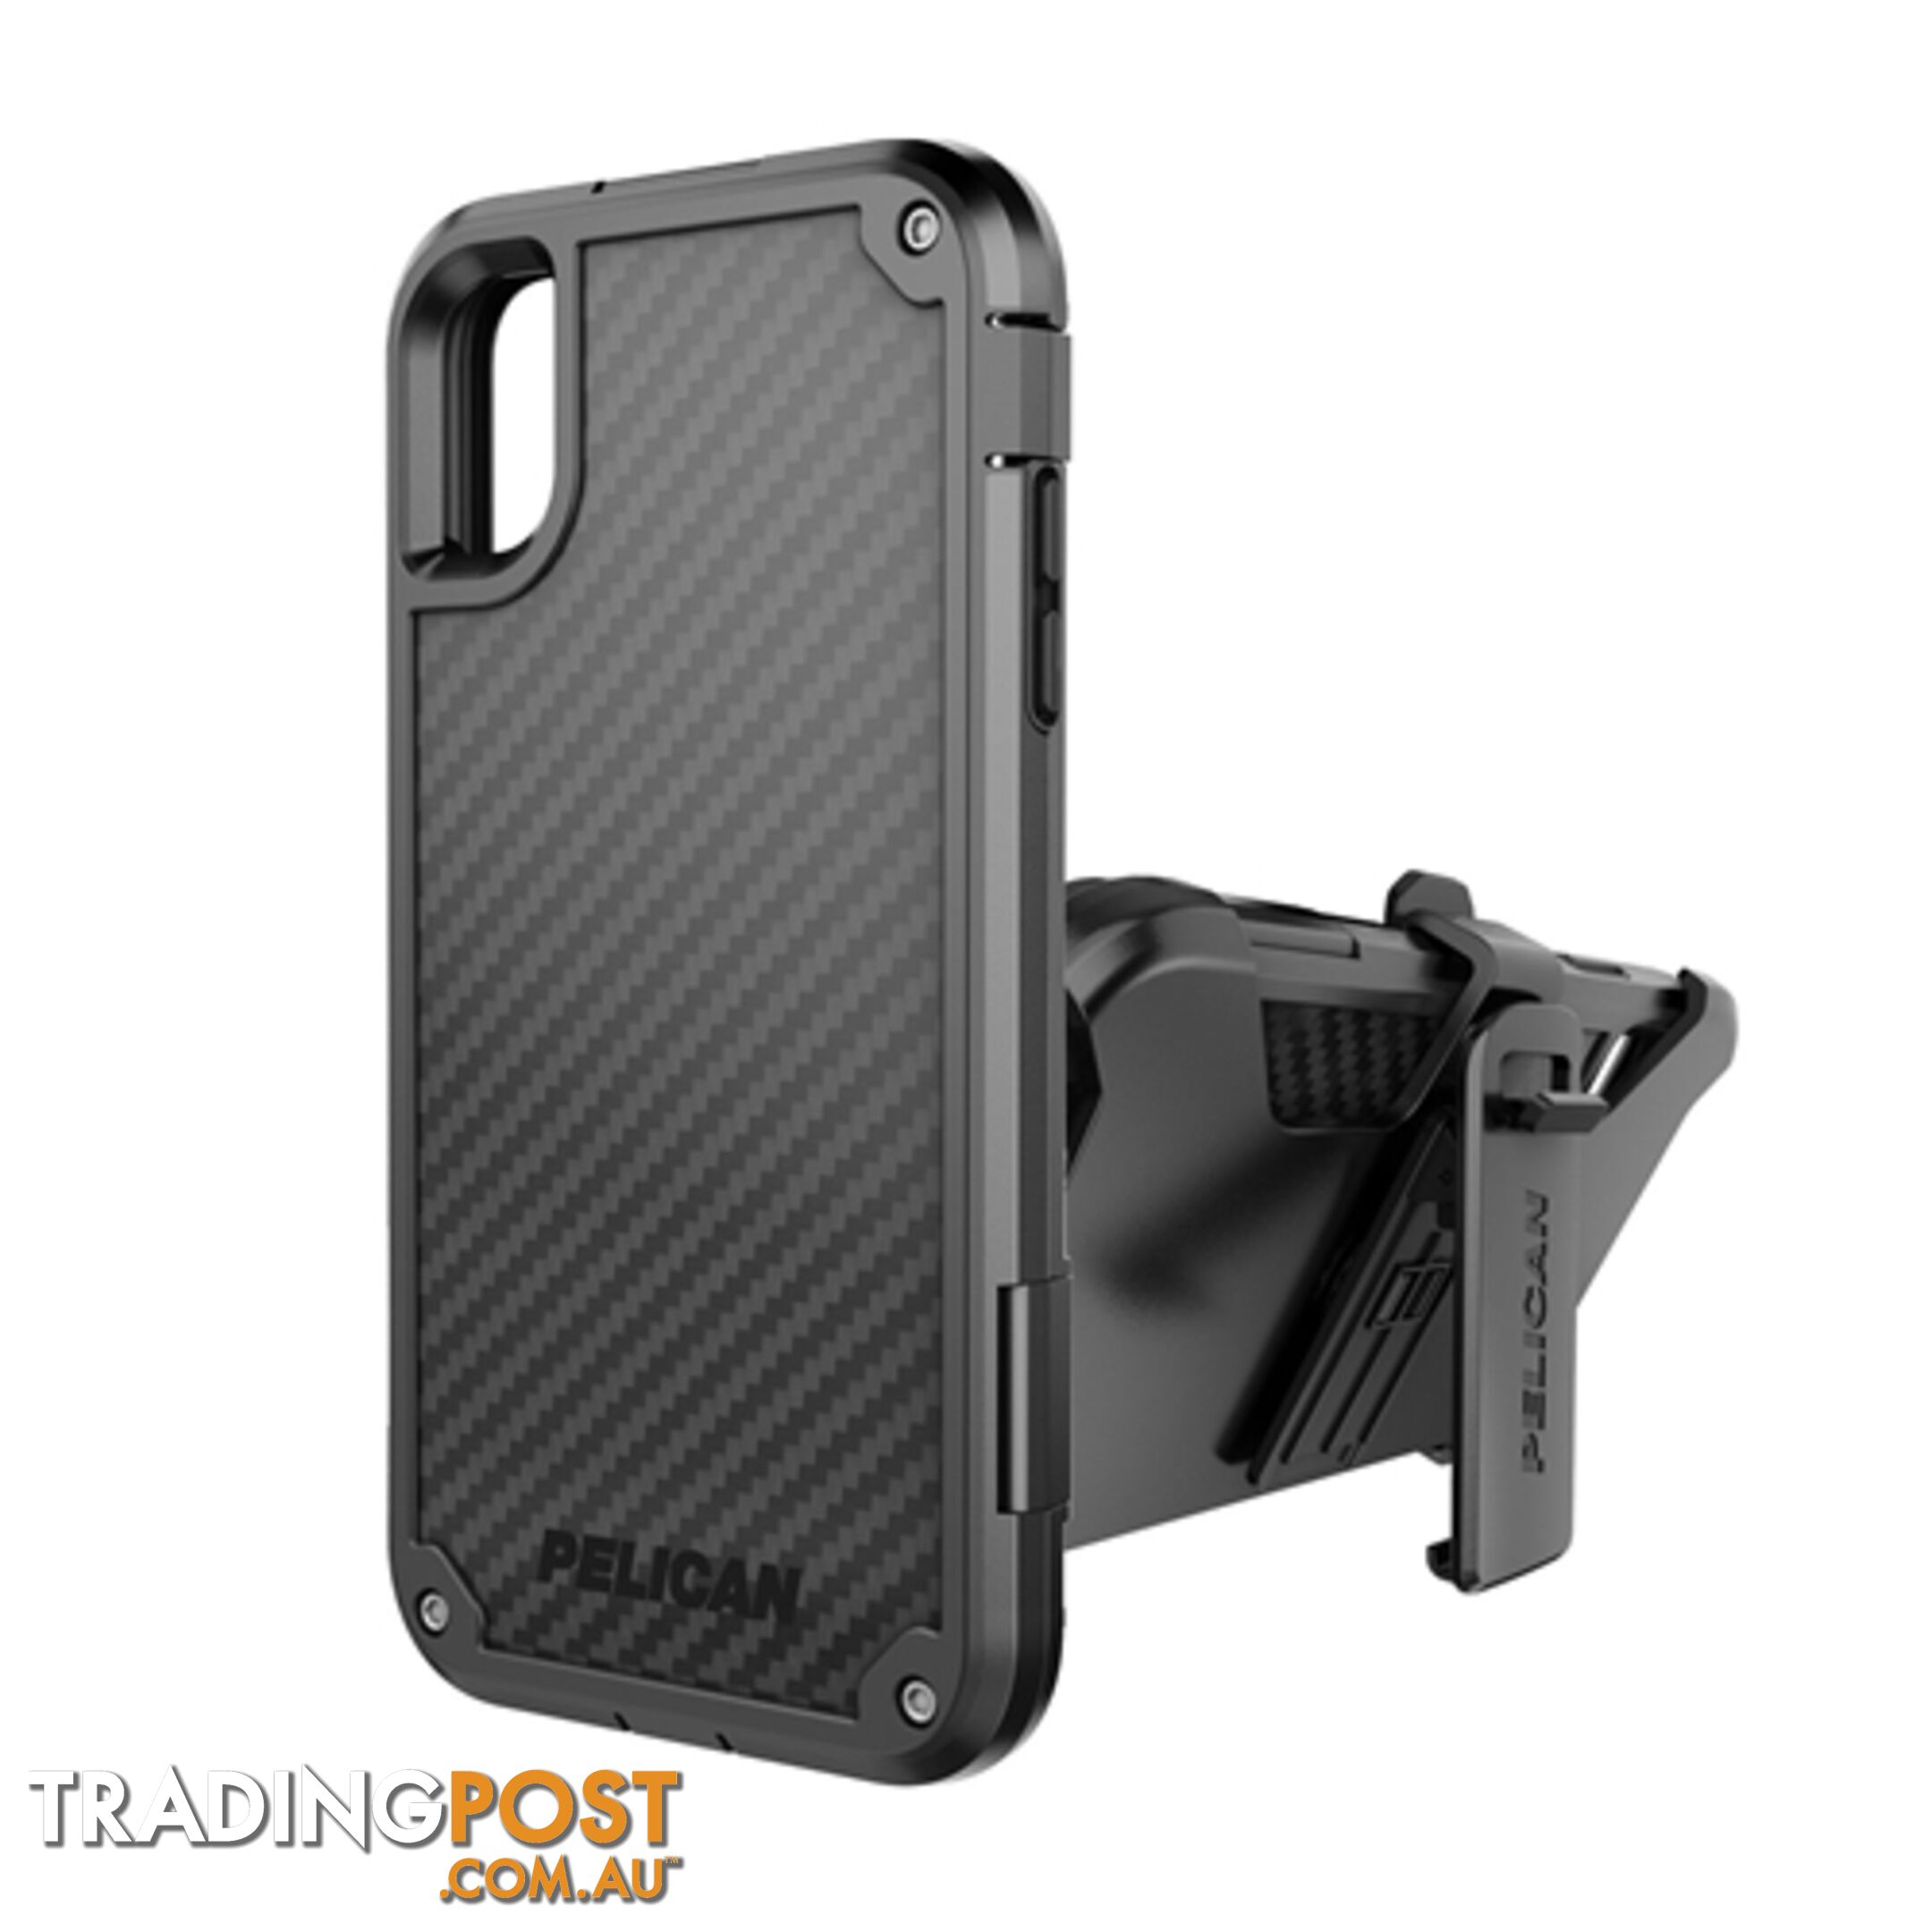 Pelican Shield Extreme Rugged Case & Belt Clip iPhone X / XS - Black - 019428164331/C37140-001B-BKBK - Pelican